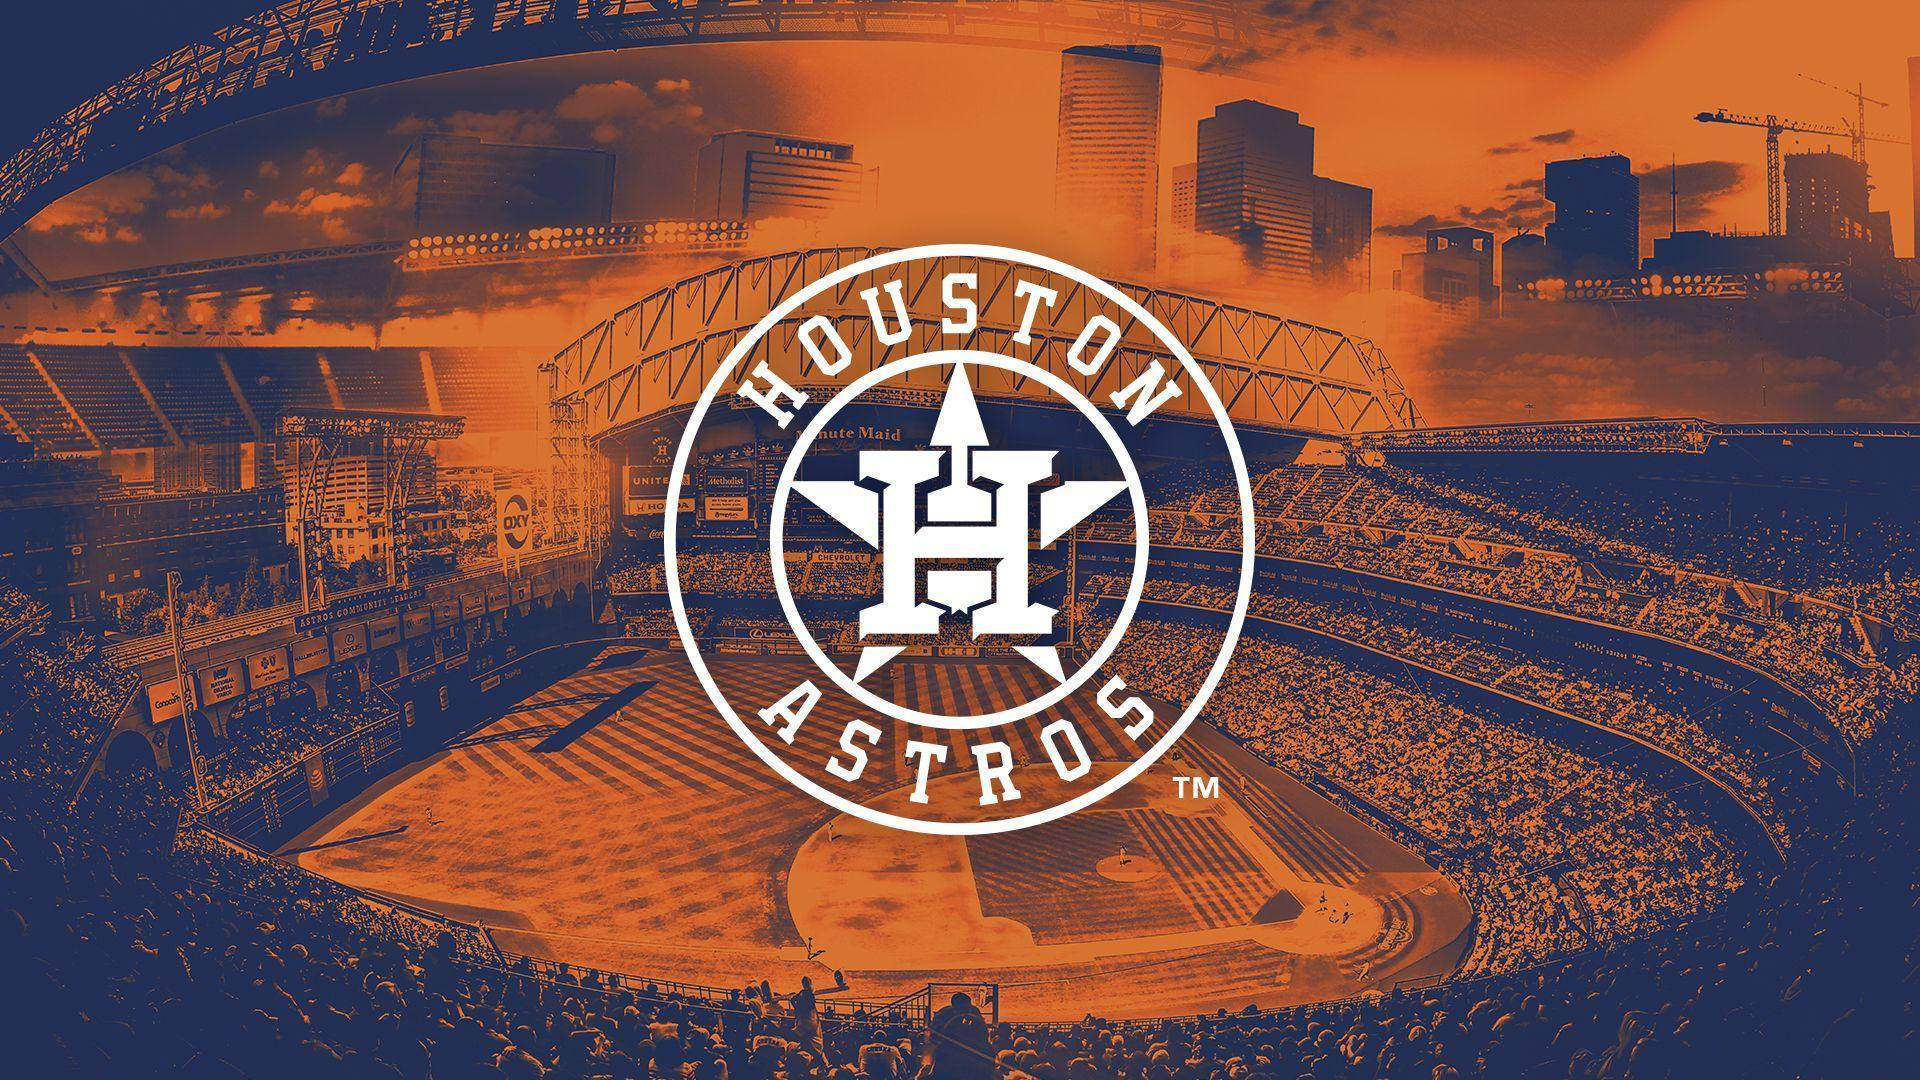 Houston Astros Monochrome Stadium